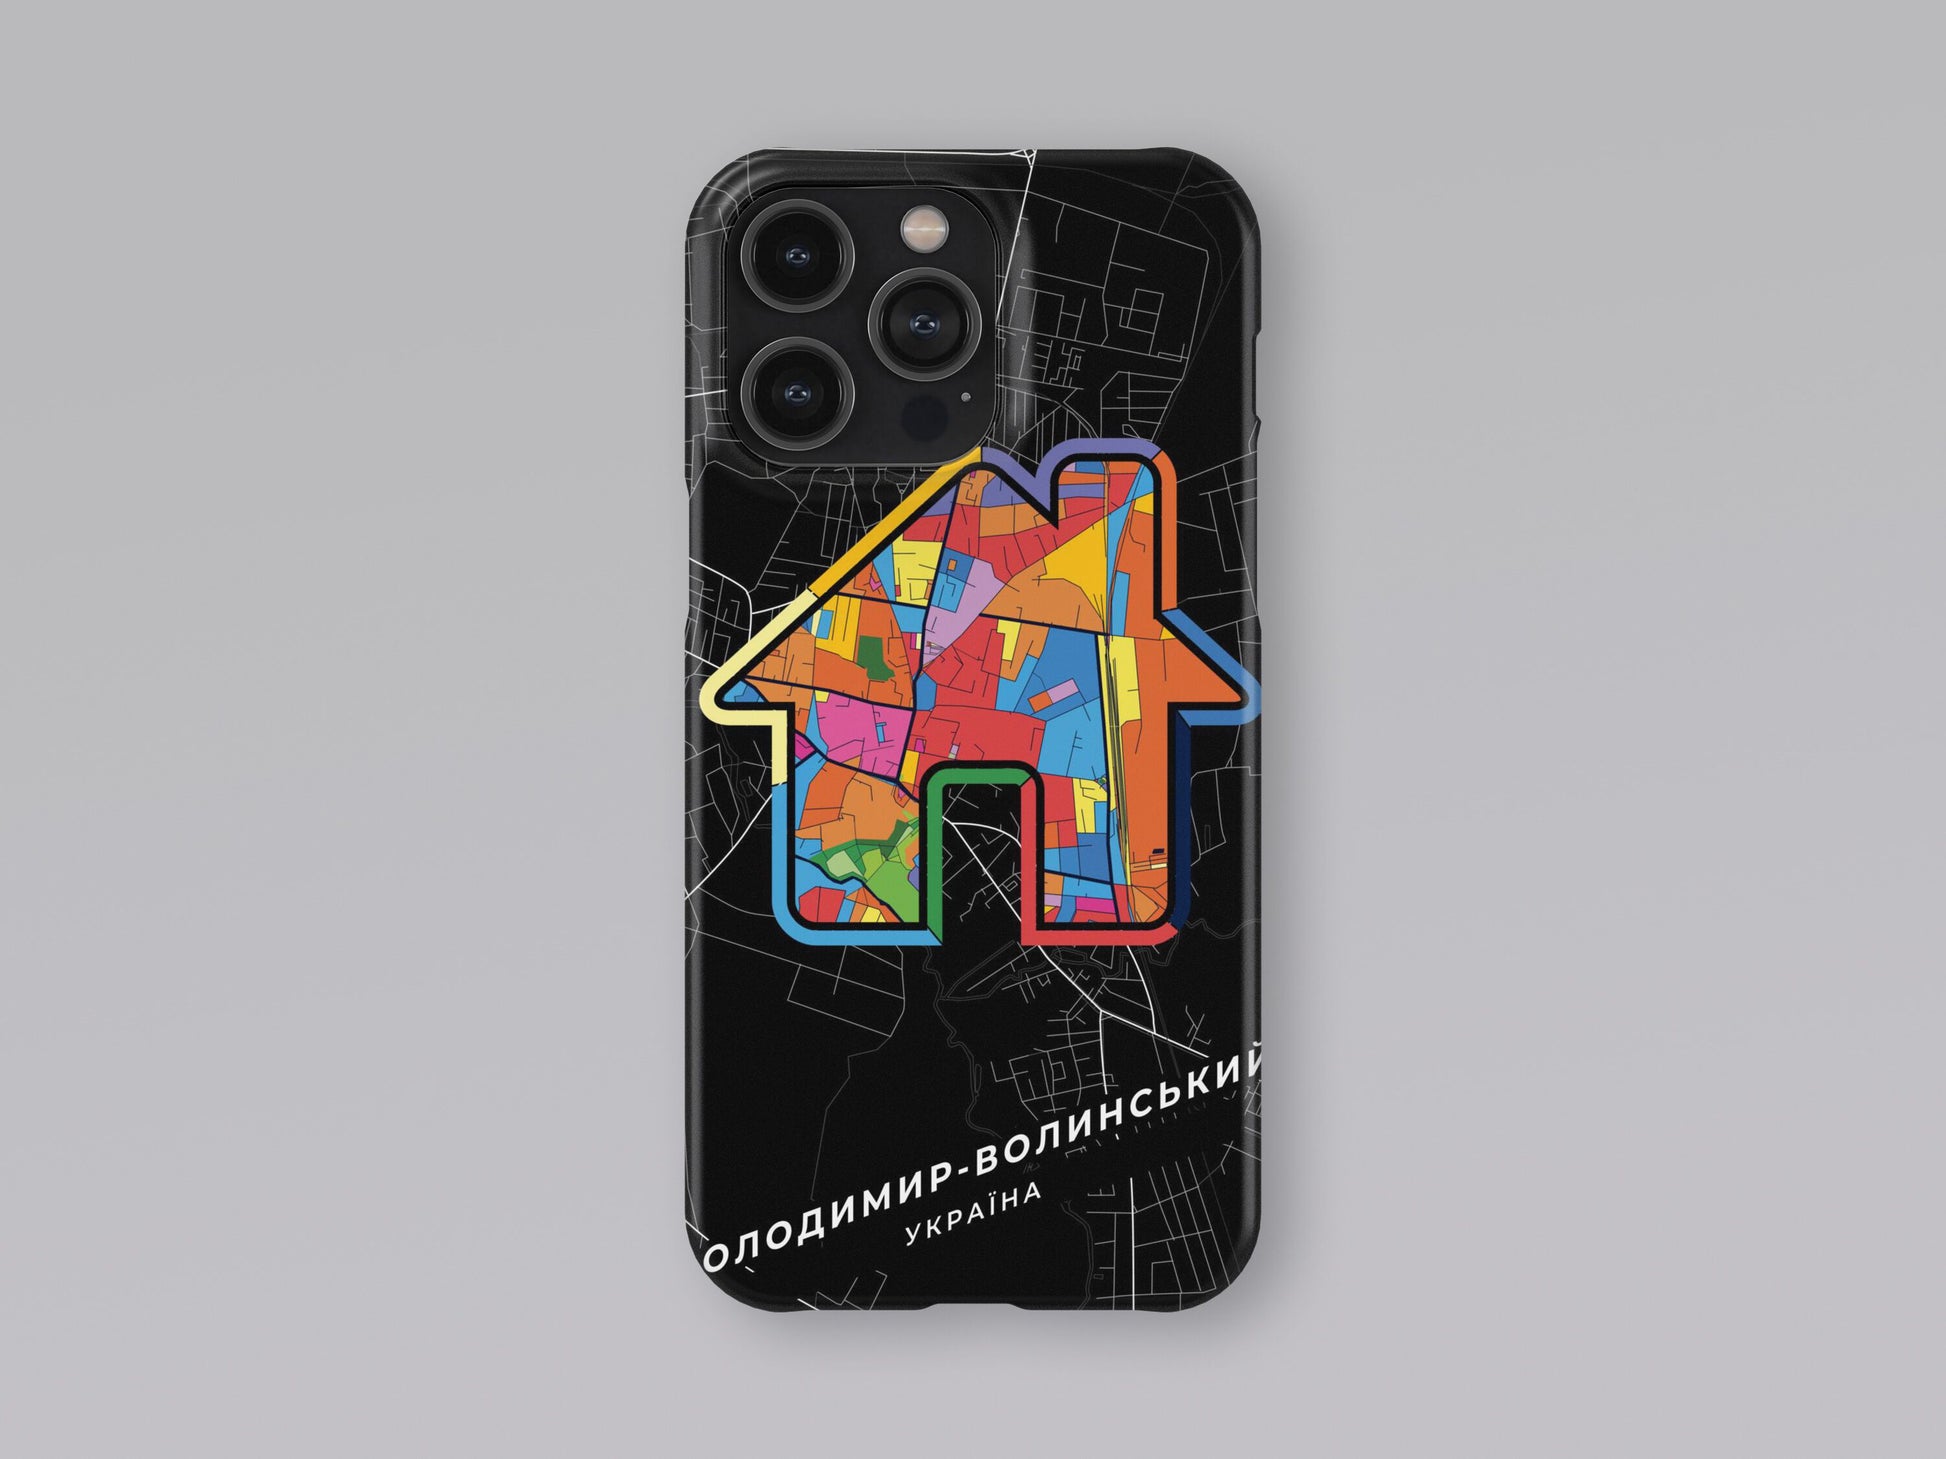 Volodymyr-Volynskyi Ukraine slim phone case with colorful icon 3